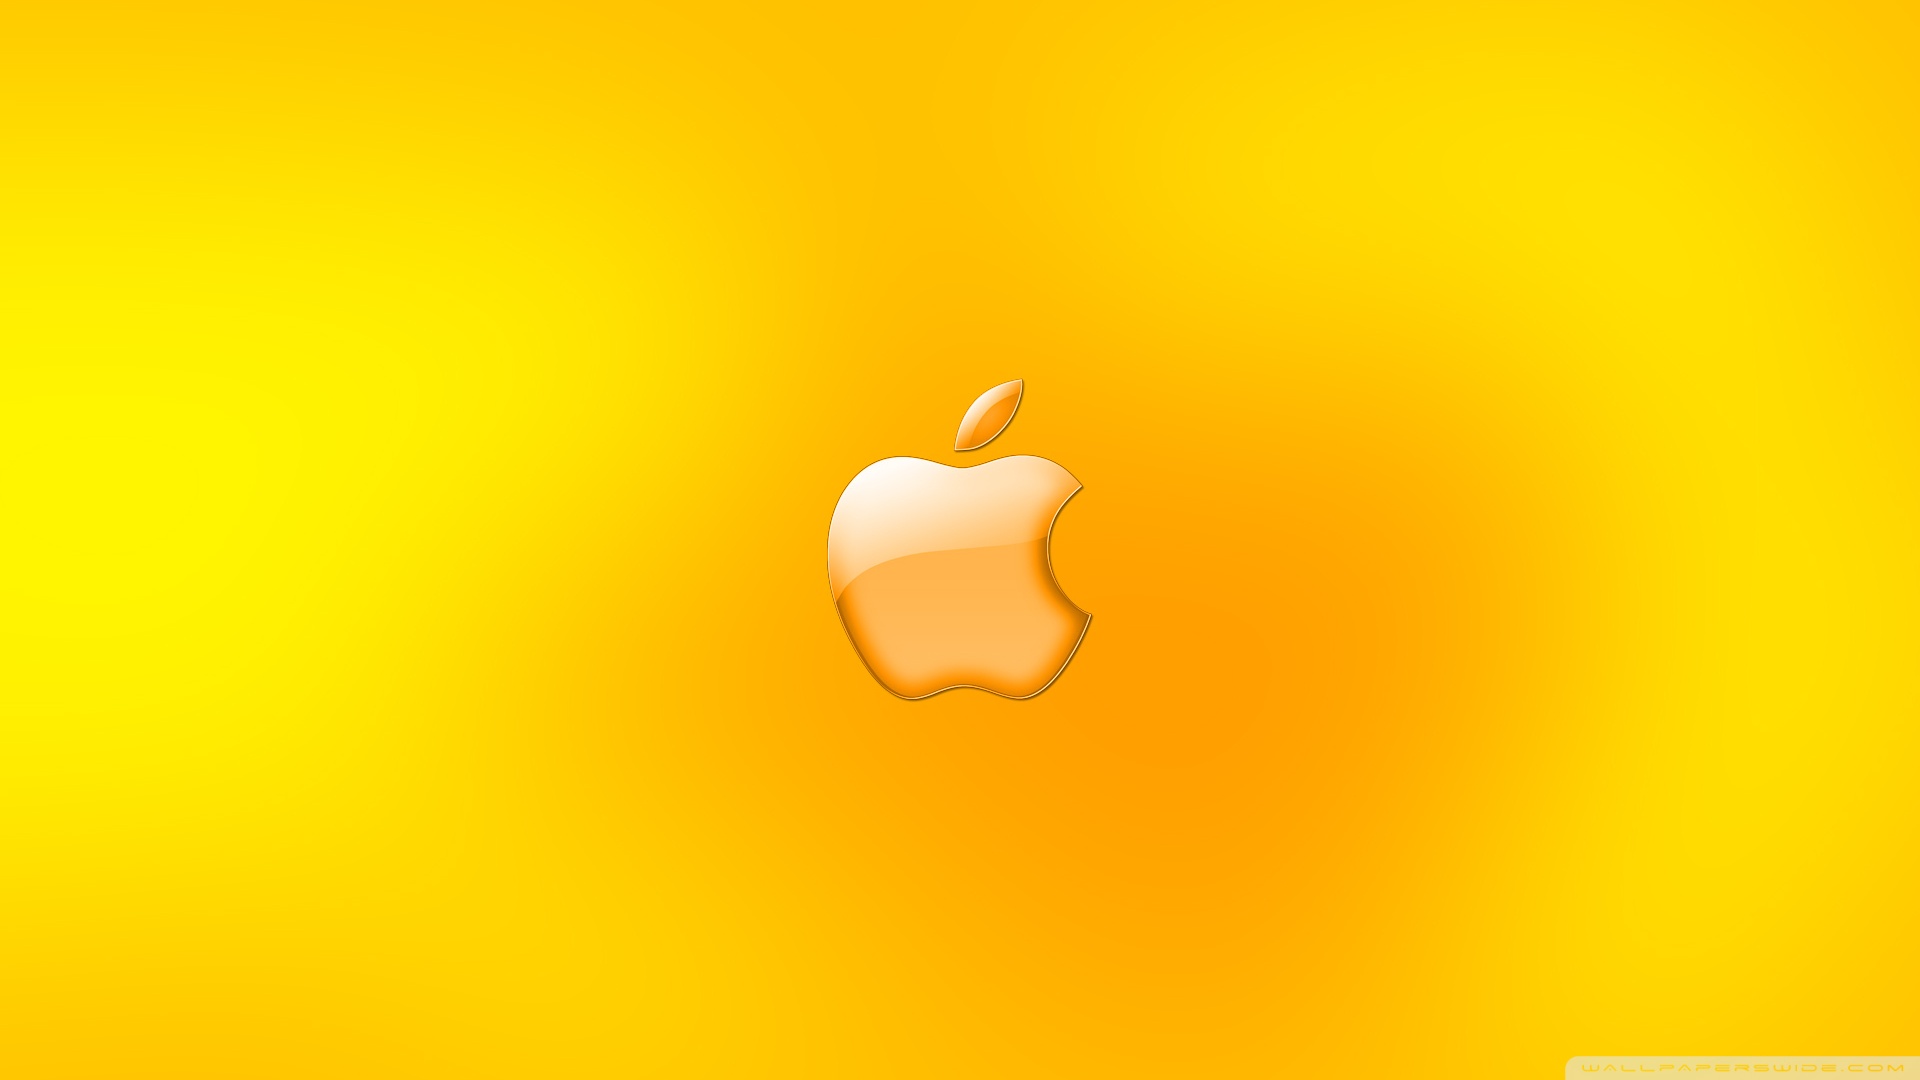 Apple Logo Gold Ultra Hd Desktop Background Wallpaper For 4k Uhd Tv Tablet Smartphone